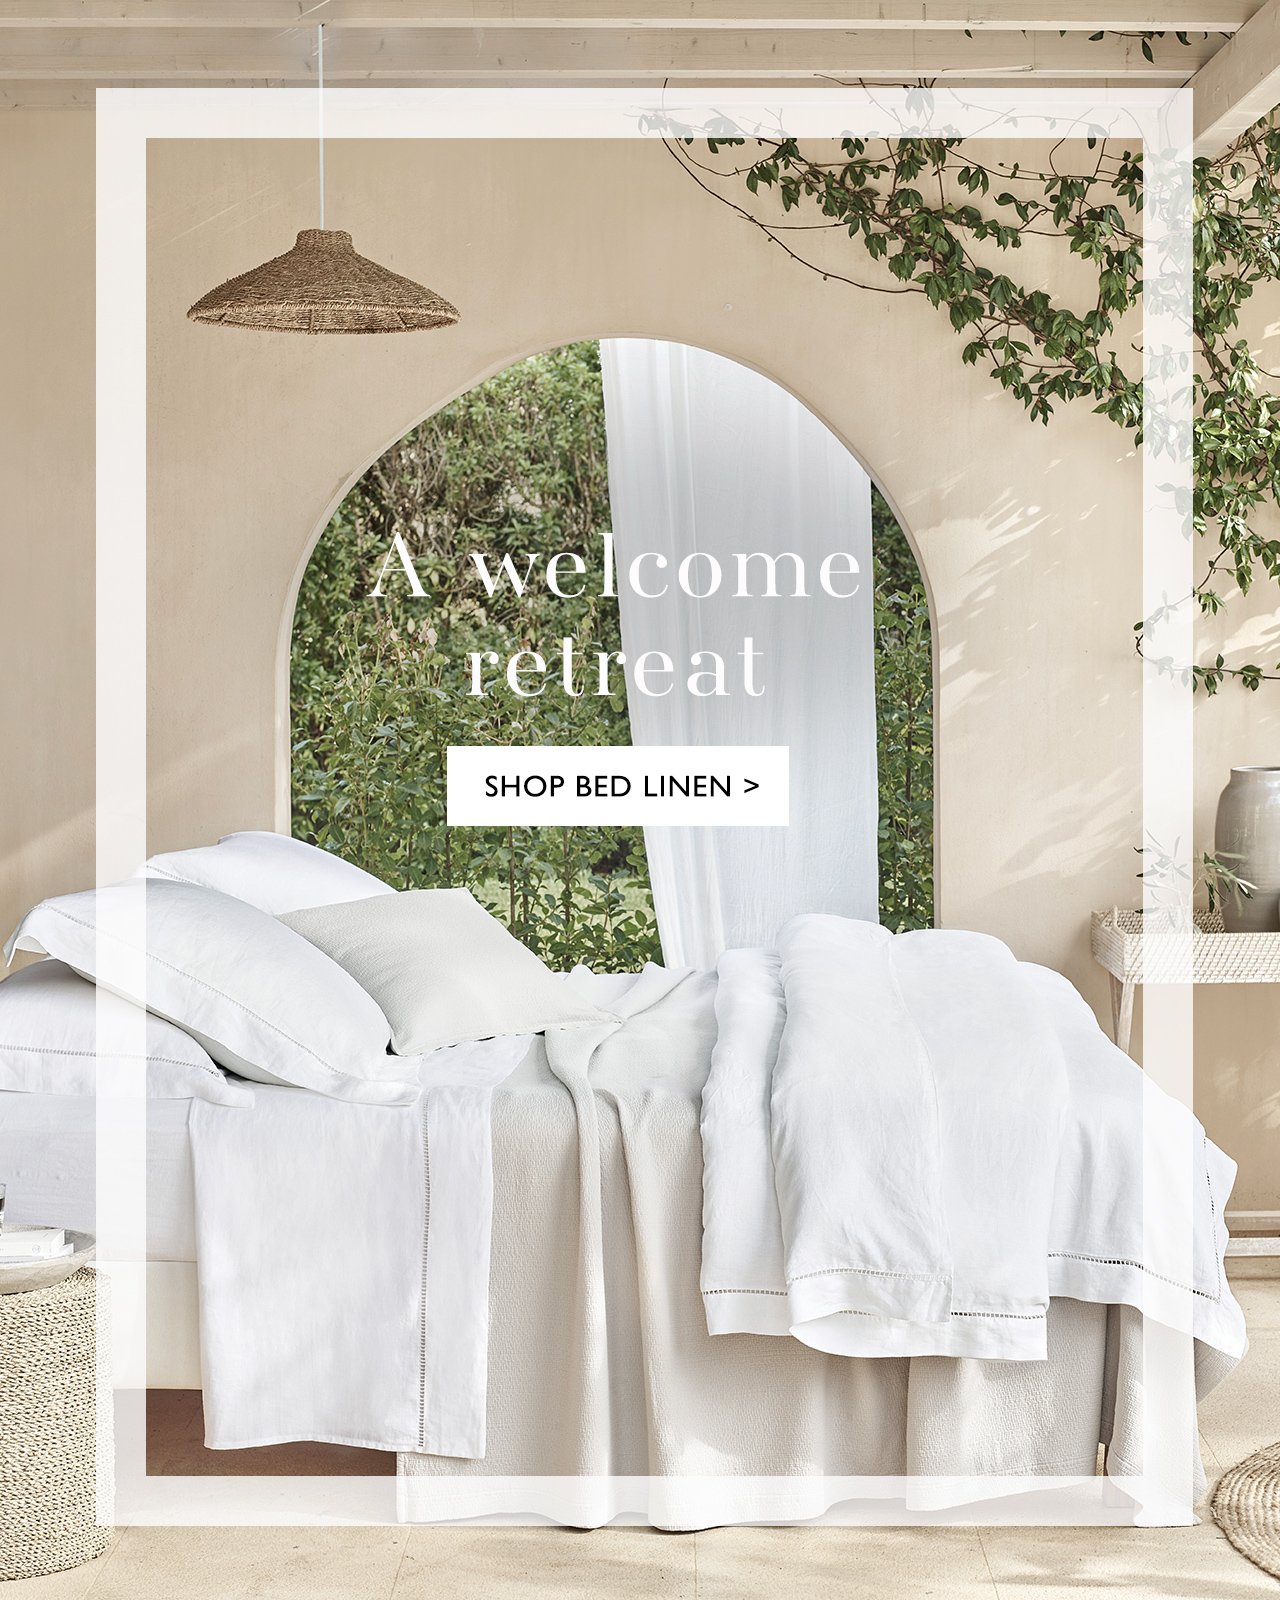 A welcome retreat Shop Bed Linen